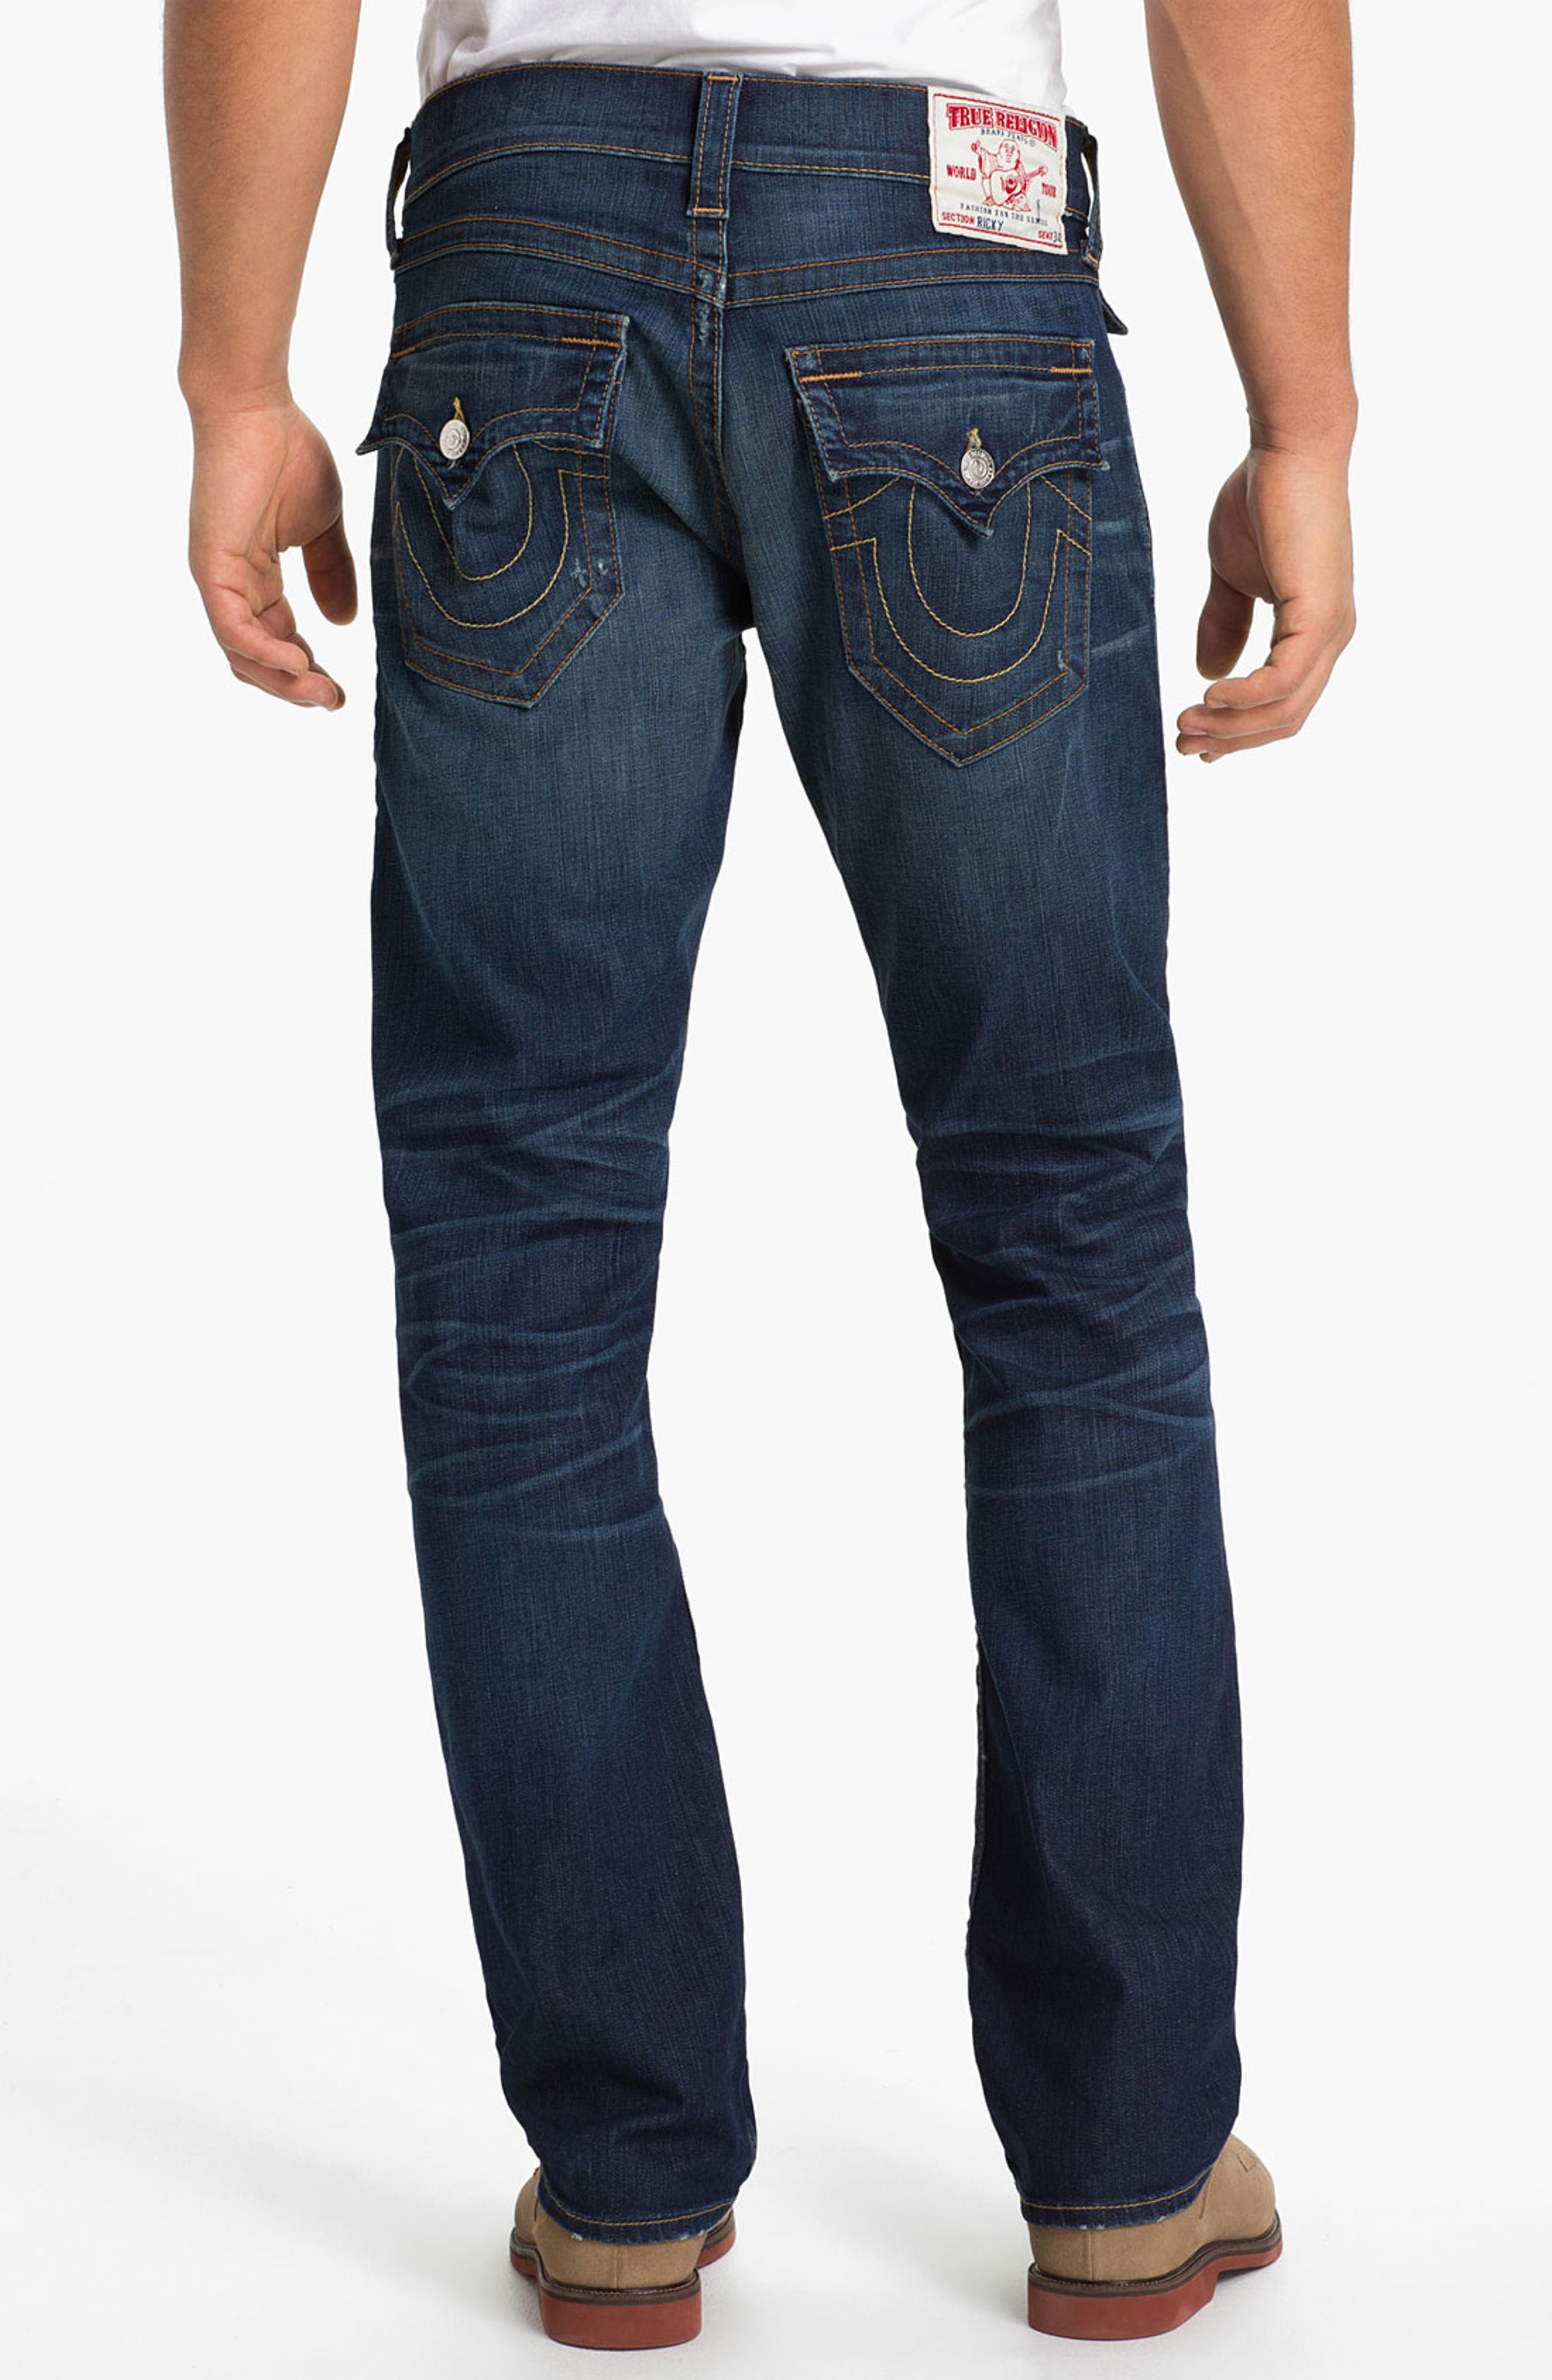 True Religion Brand Jeans 'Ricky' Straight Leg Jeans (Jackknife